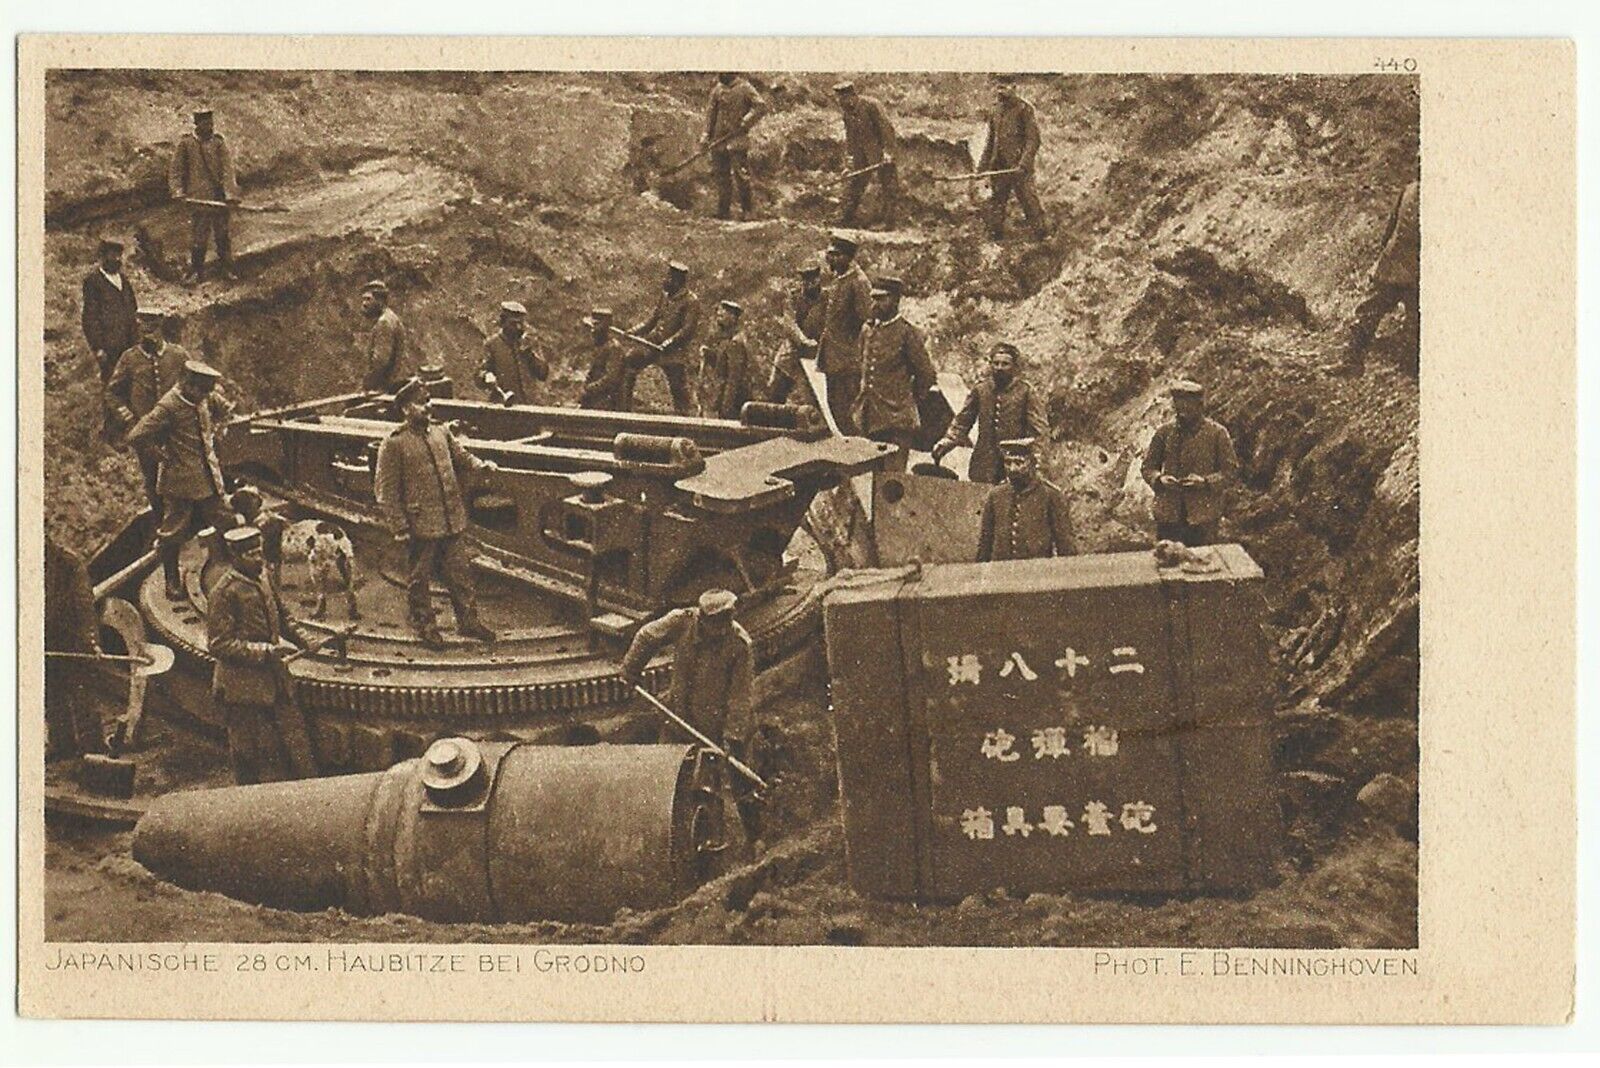 Japanese 28 cm Howitzer Near Grodno Belarus, Postcard WWI Germany, 1915